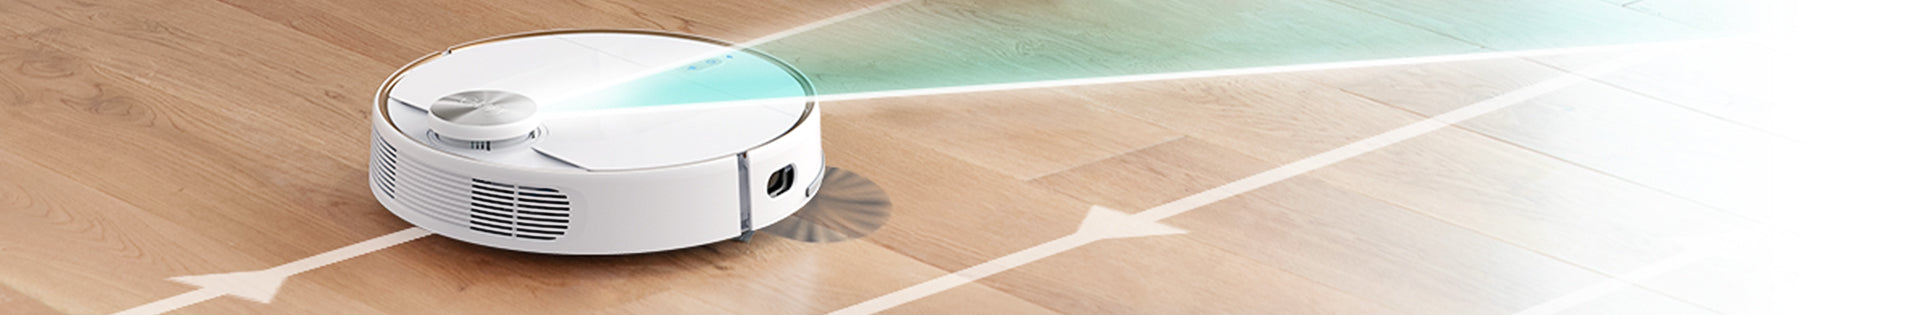 eufy Appliances RoboVac iPath Laser Navigation Series